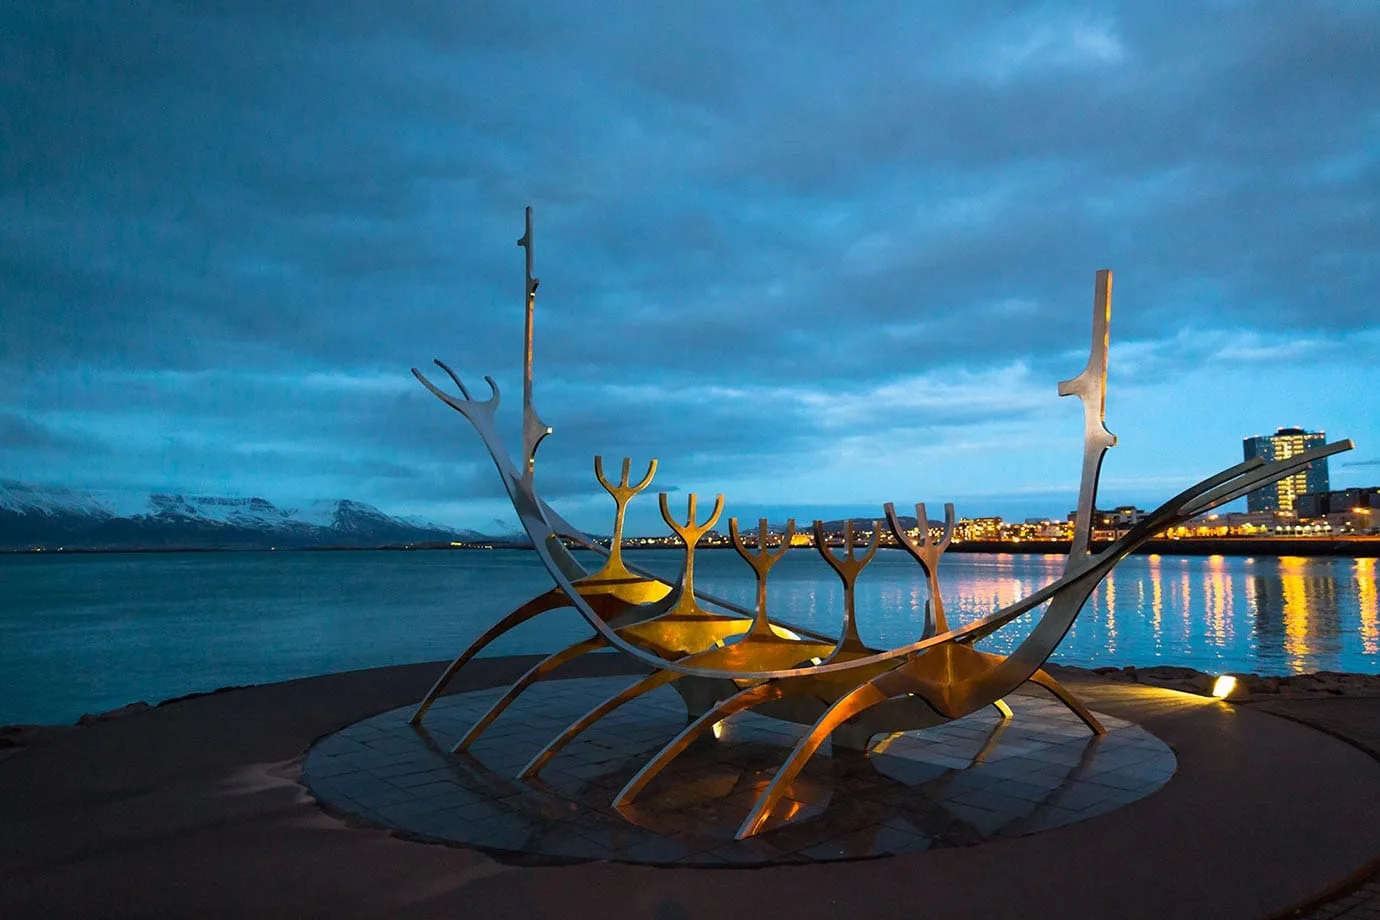 Sun Voyager sculpture, Reykjavik